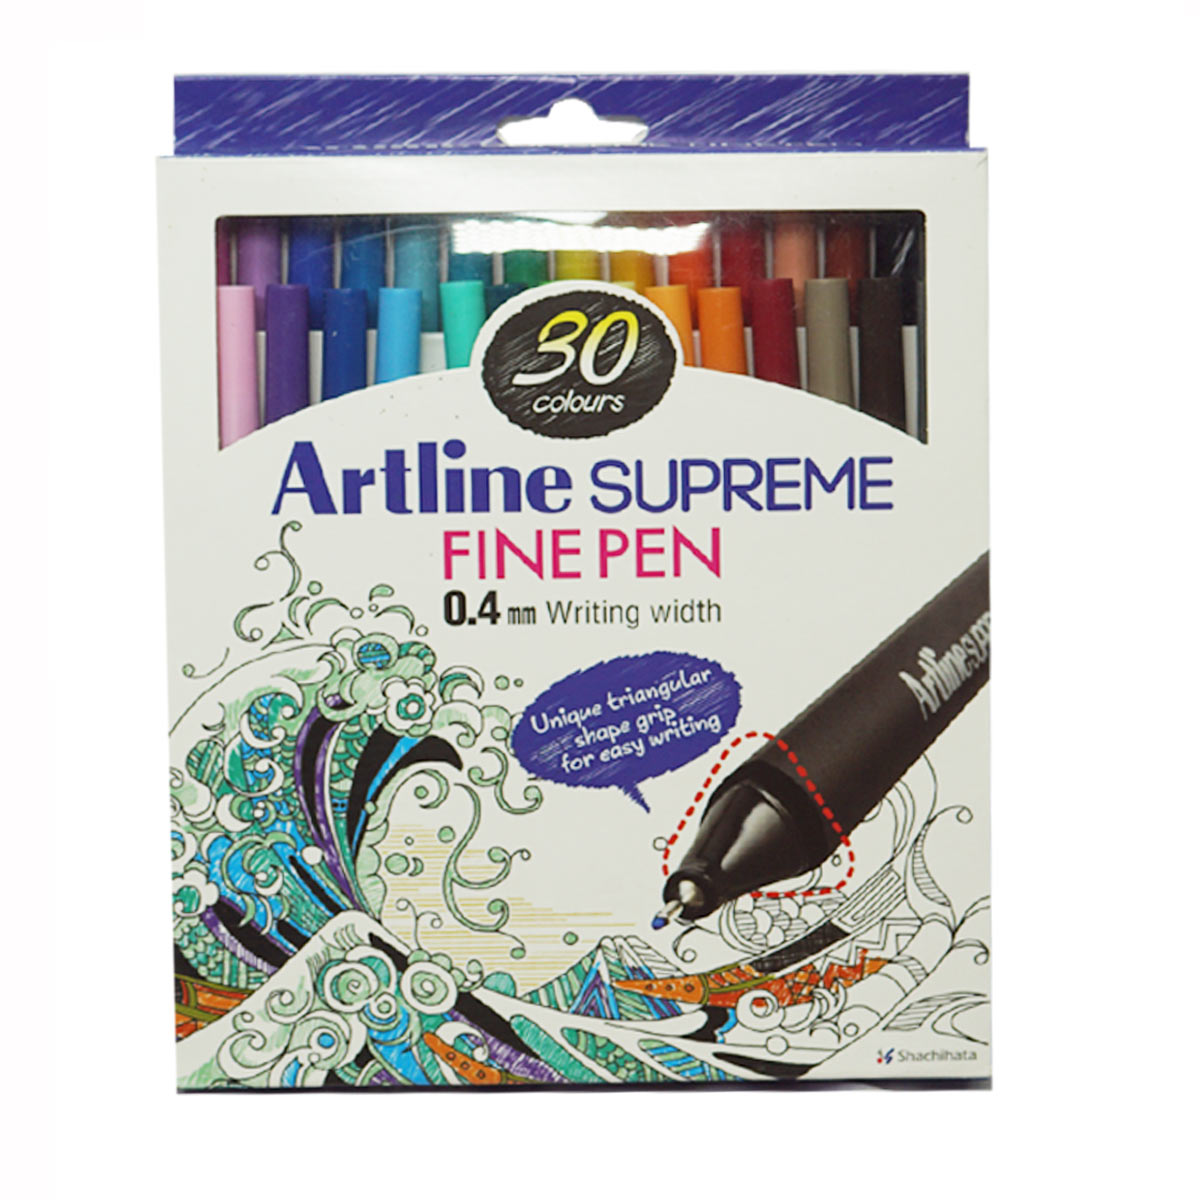 Artline Supreme 0.4mm(Writing Width) Fine Pen With 30 Colours SKU 22626